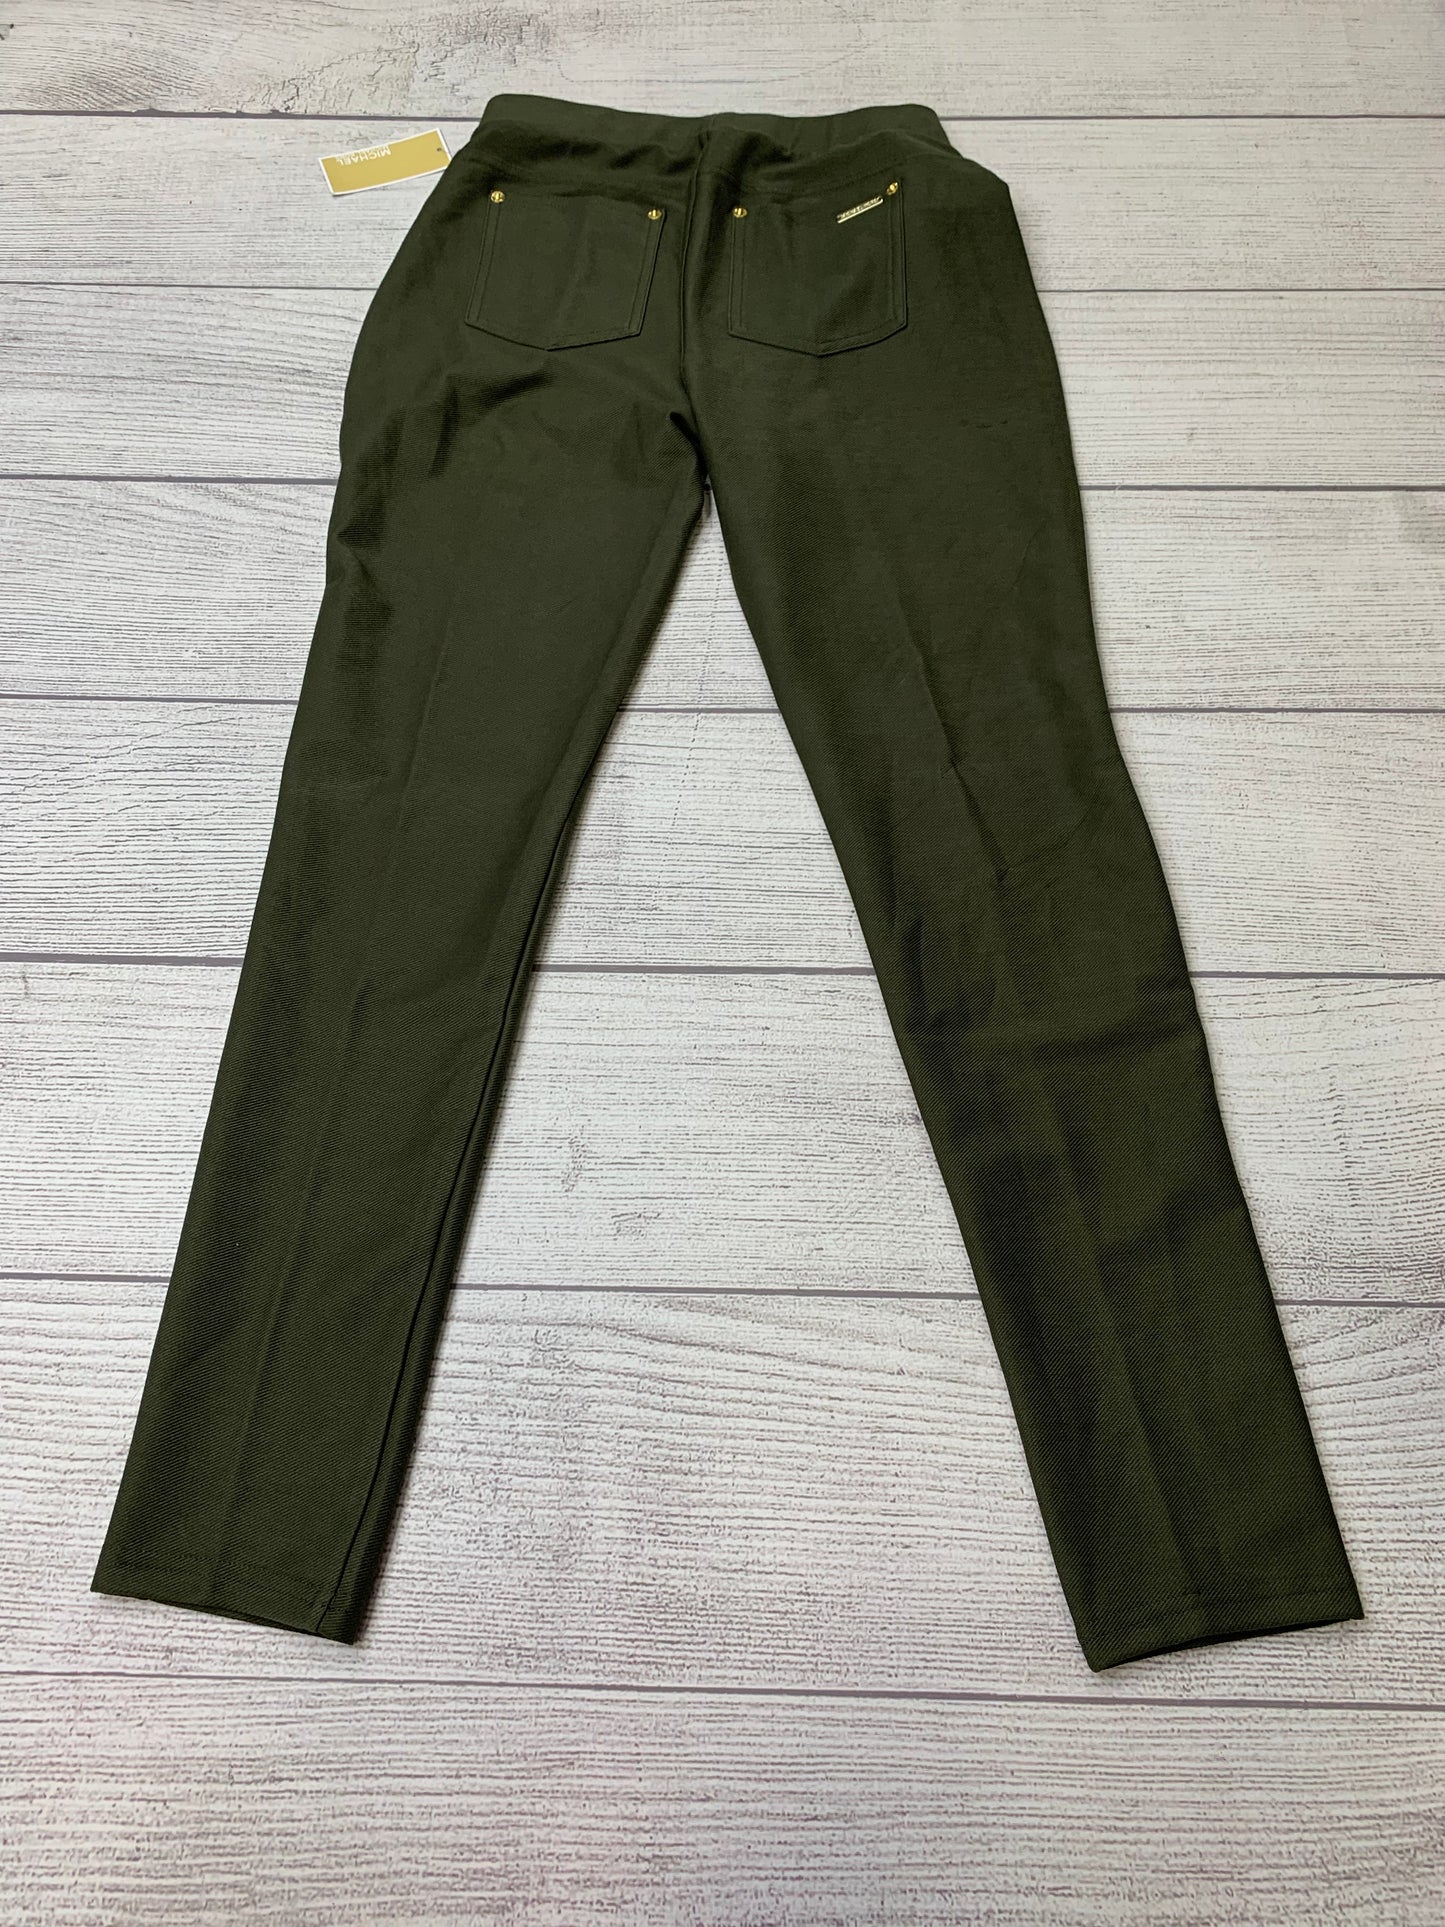 Green Pants Designer Michael Kors, Size 8